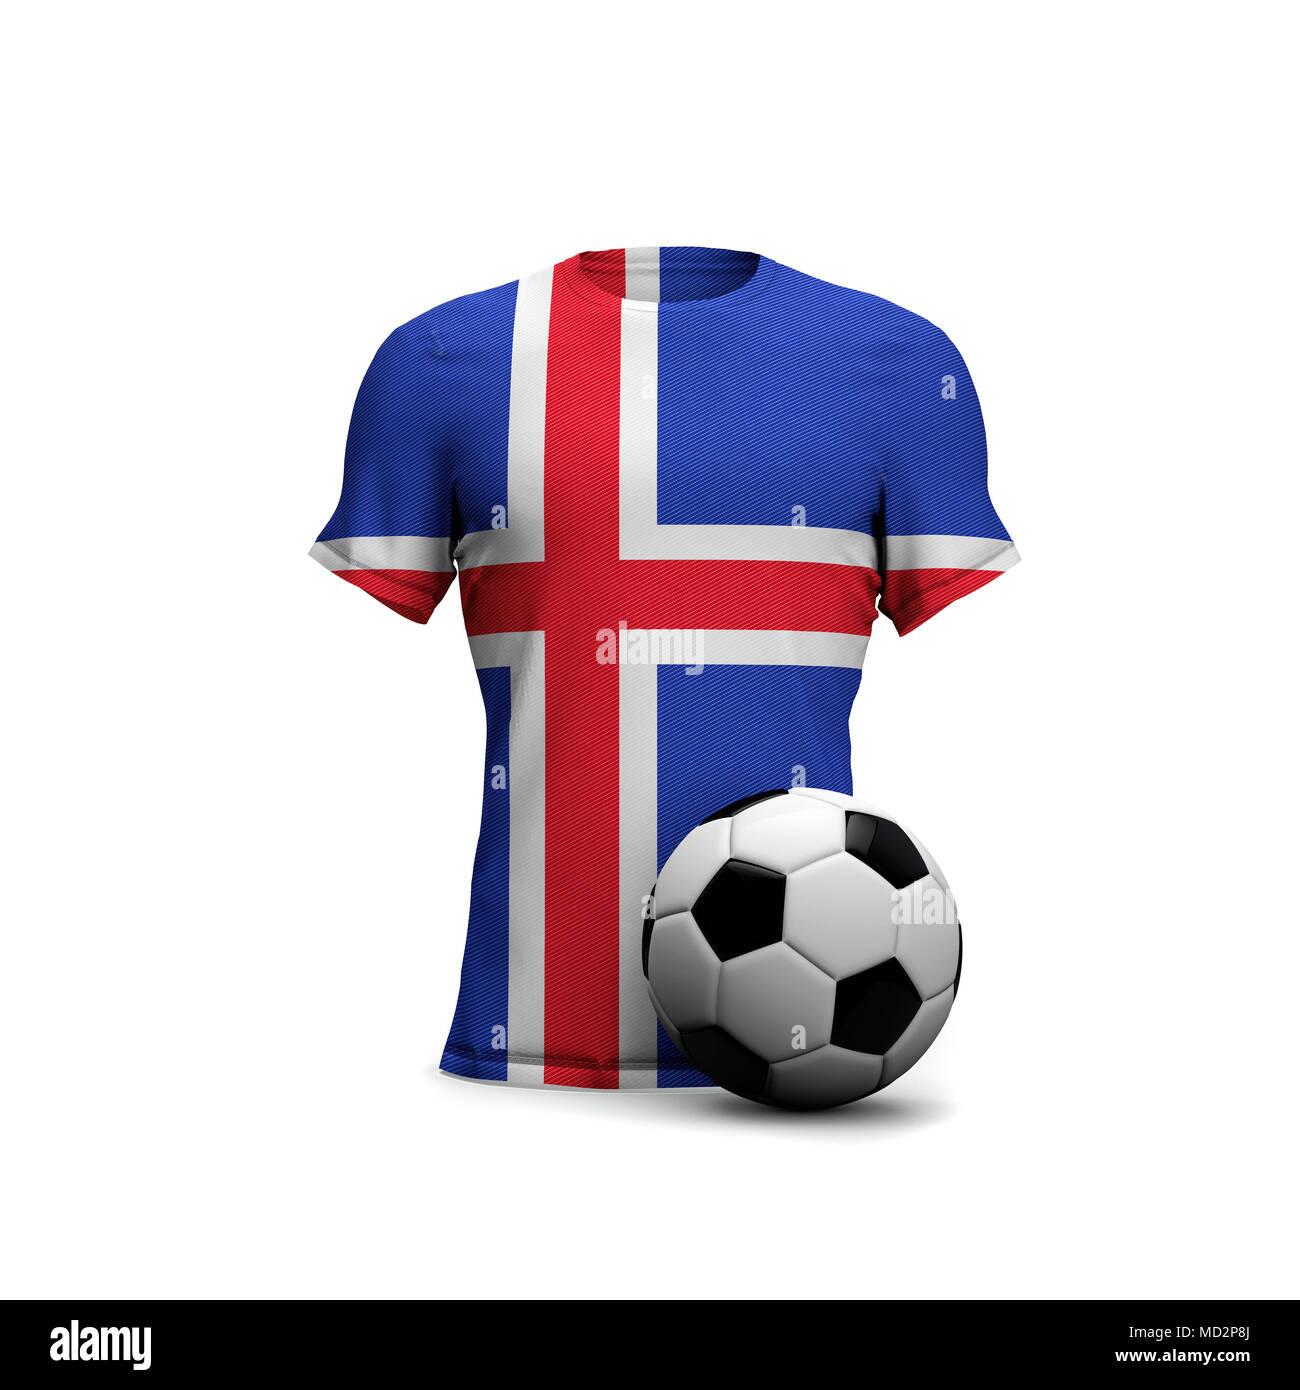 Iceland soccer apparel